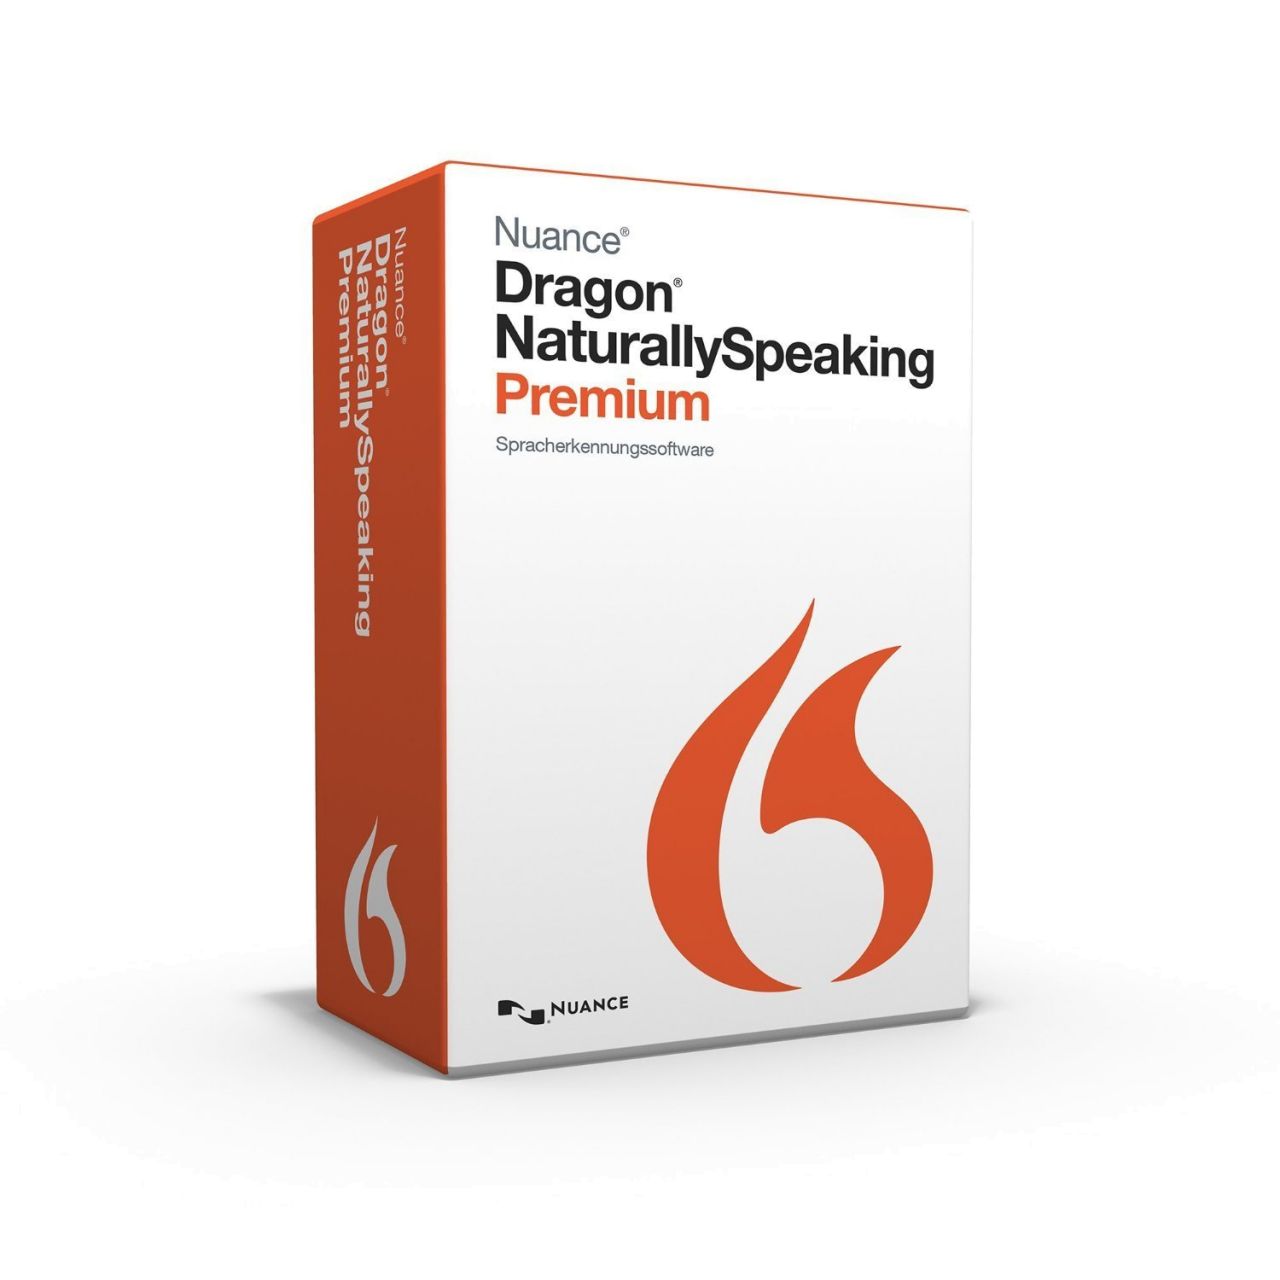 Nuance Dragon NaturallySpeaking 13 Premium, 1 utilizador, 1 aparelho, DE, EN, FR